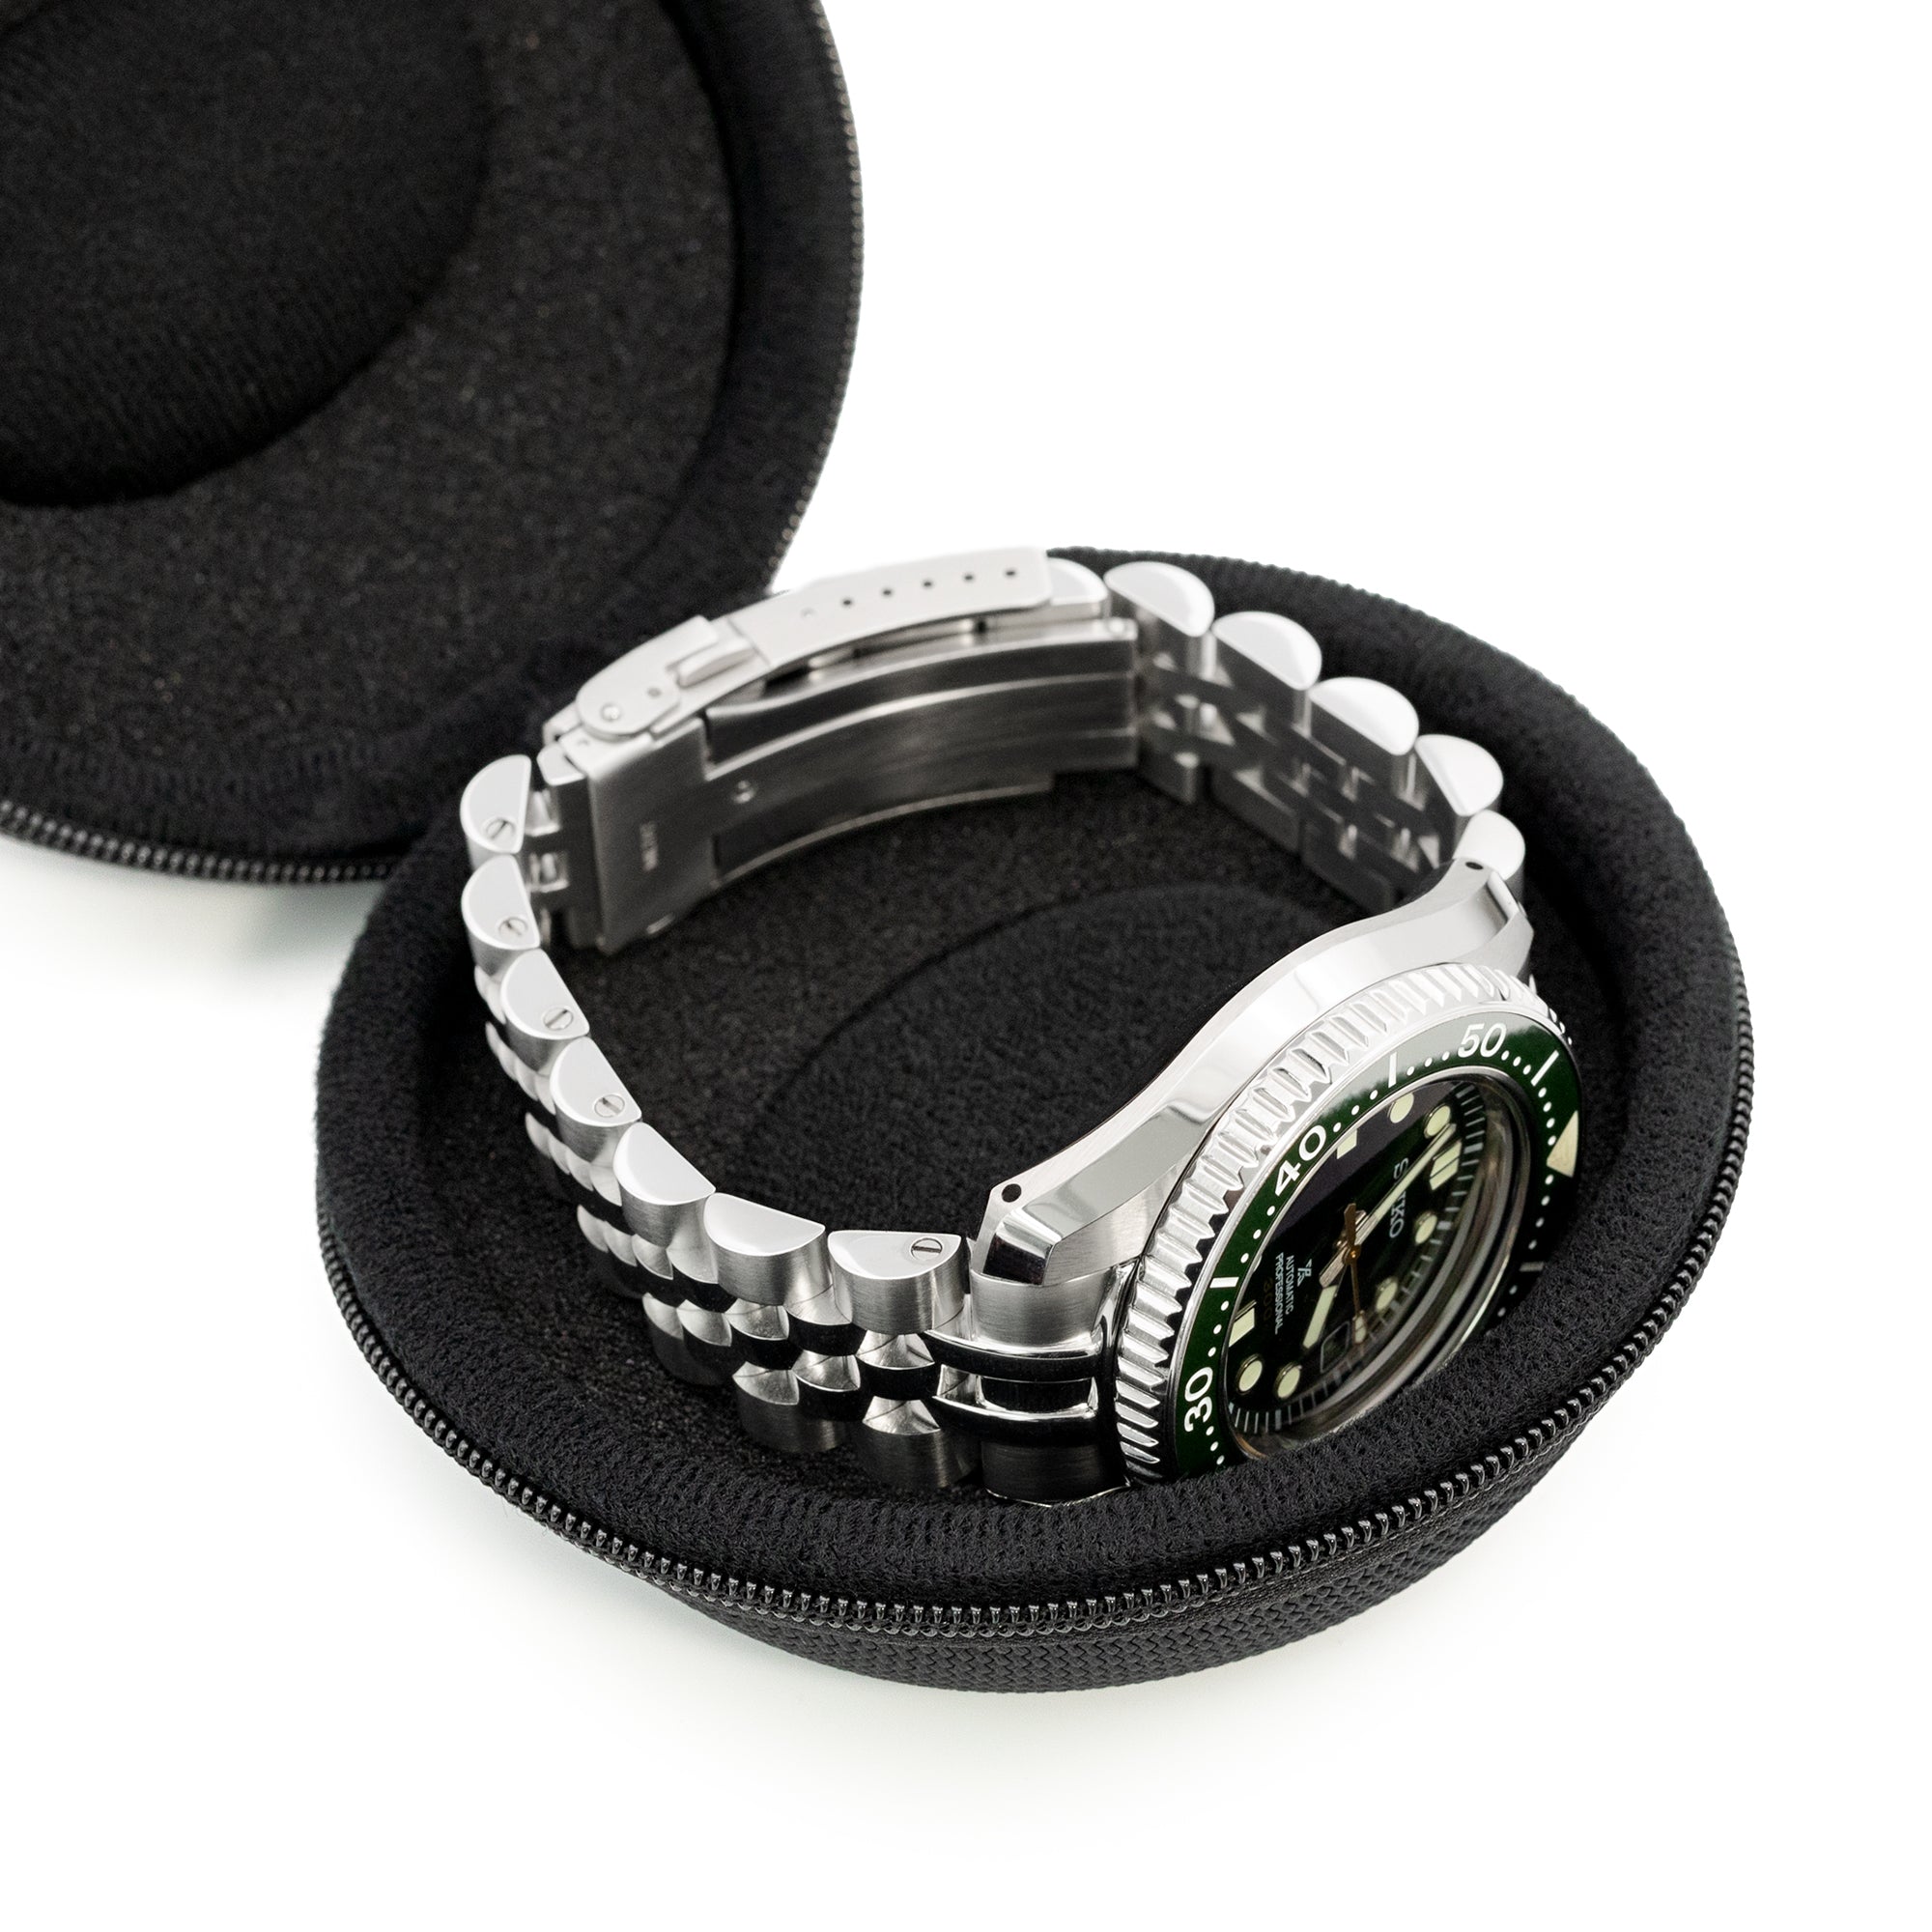 Round Watch Travel Hard Case Single Watch Box with Zipper, Black Strapcode Watch Bands